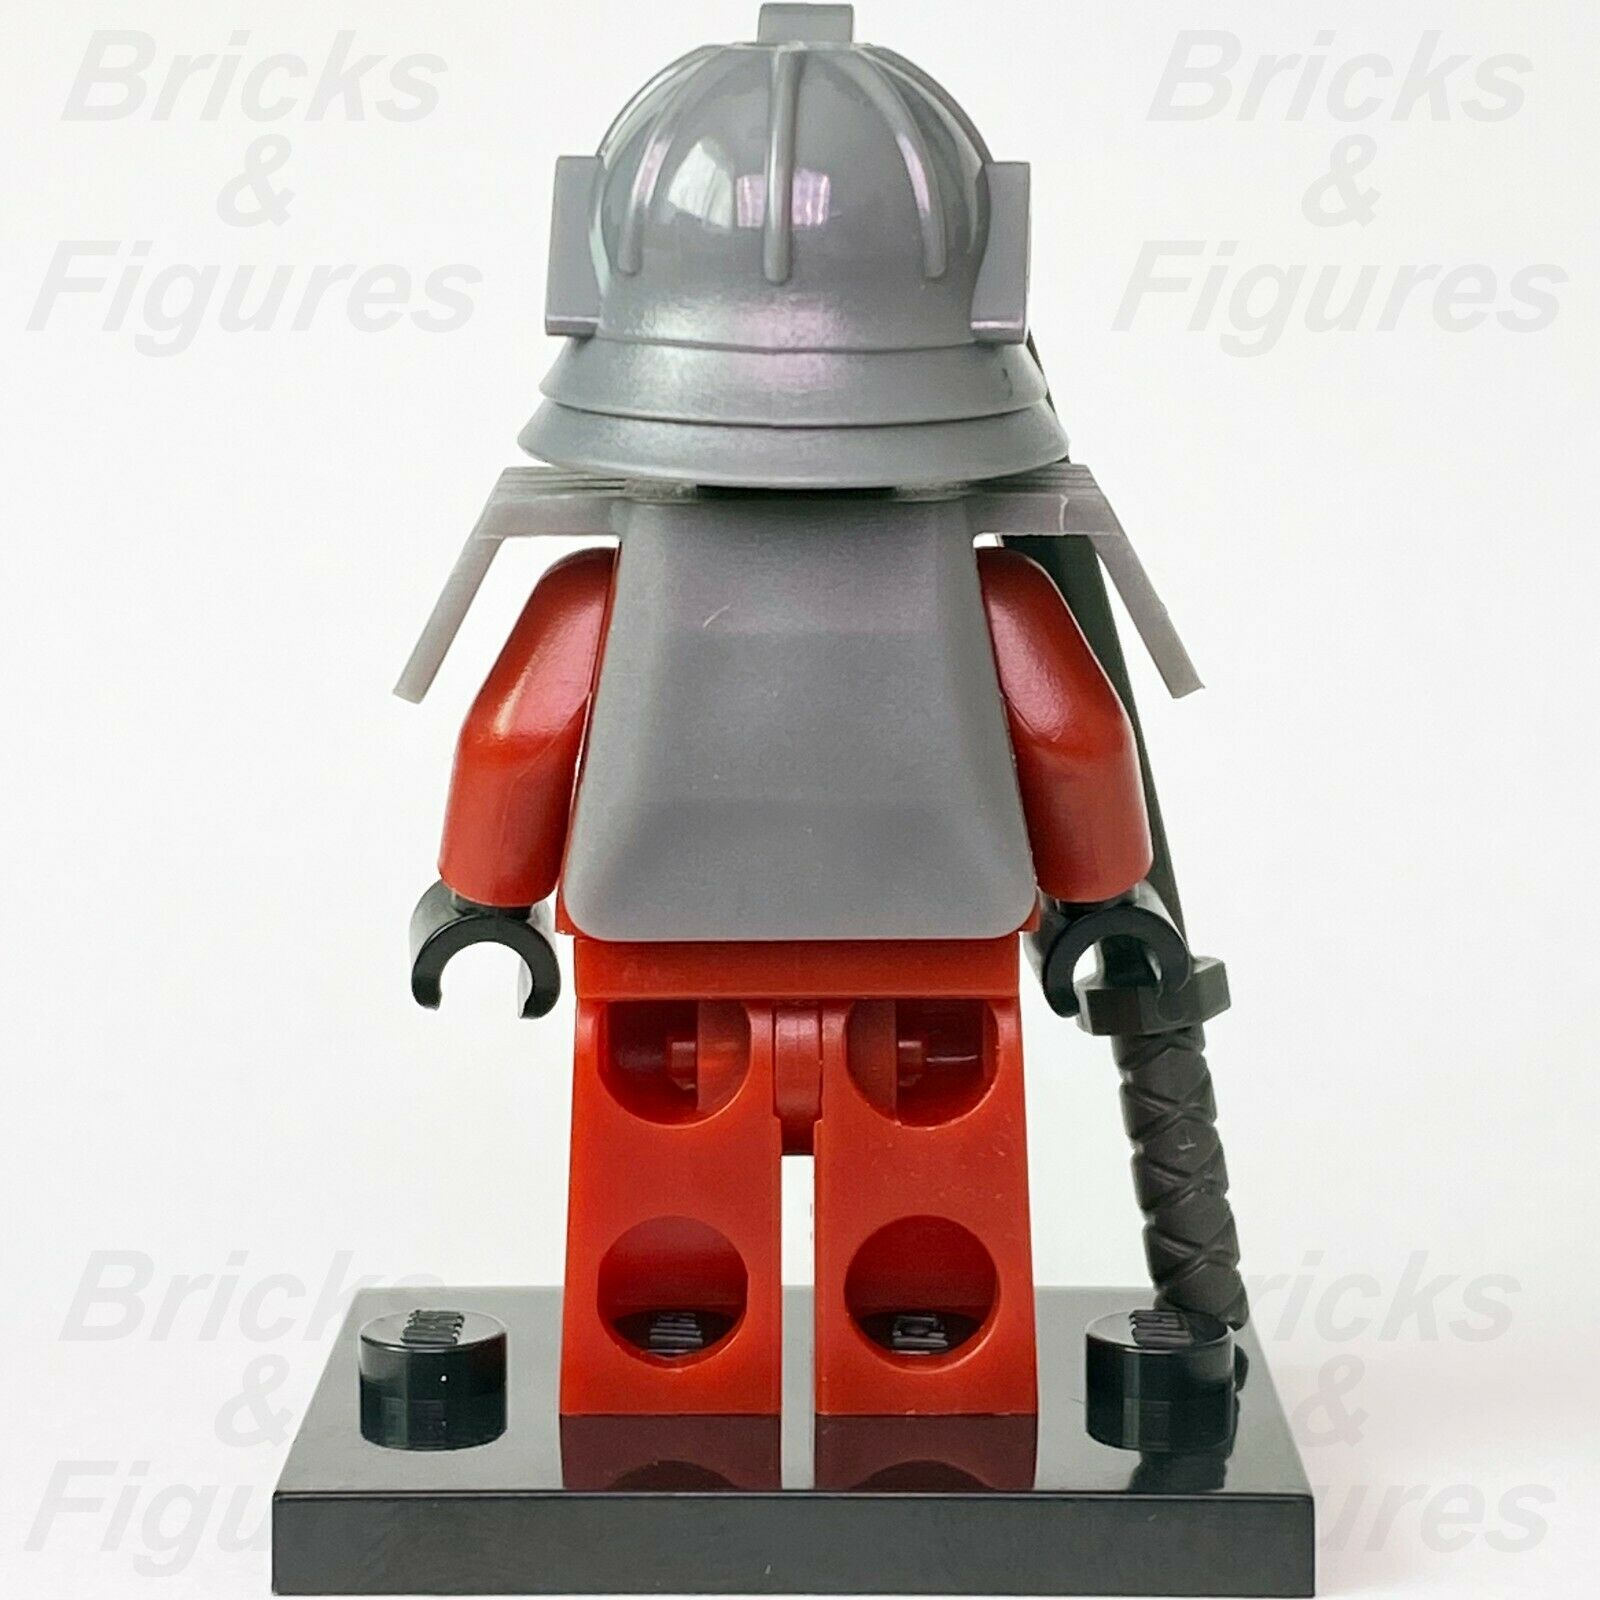 New Collectible Minifigures LEGO Samurai Warrior Soldier Series 3 Minifig 8803 - Bricks & Figures